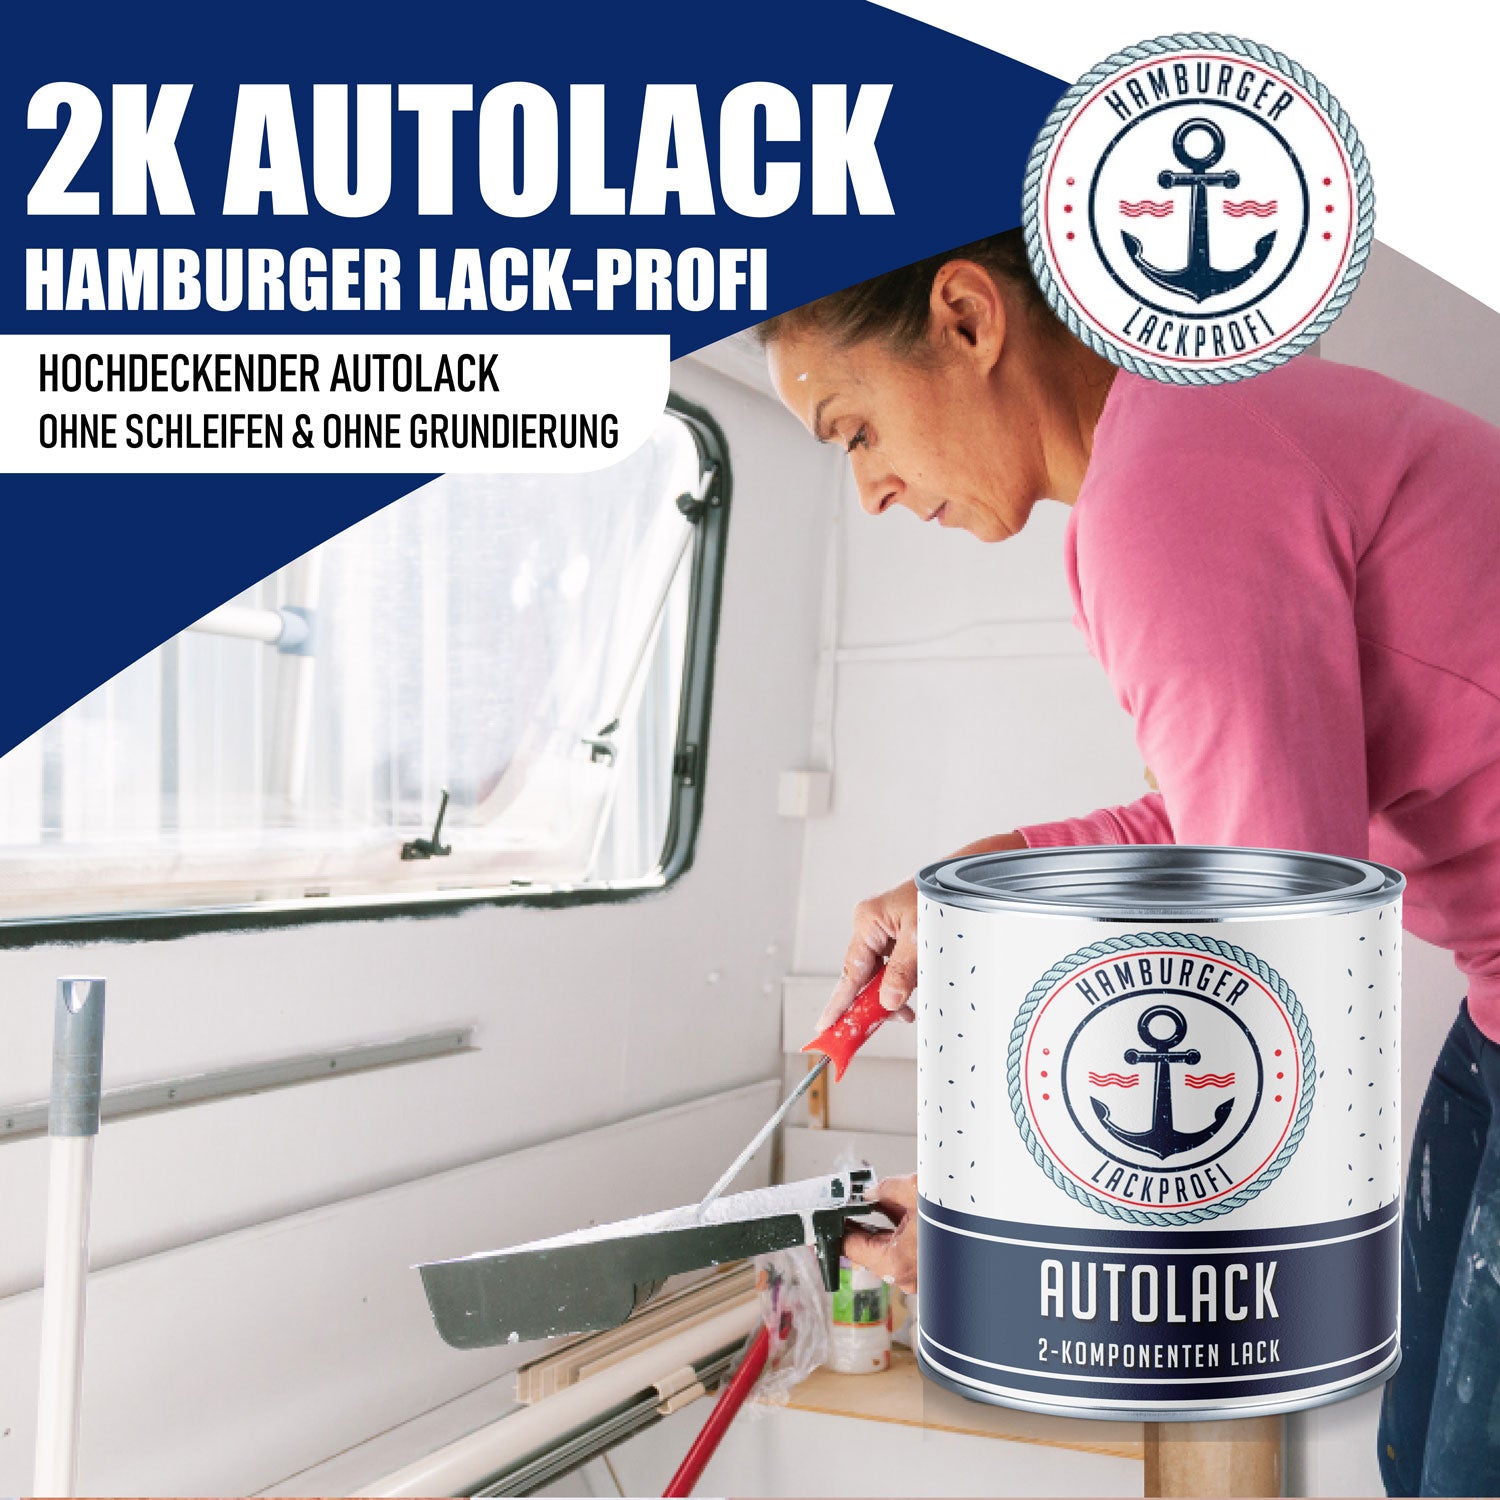 Hamburger Lack-Profi 2K Autolack in RAL 1011 Braunbeige mit Lackierset (X300) & Verdünnung (1 L) - 30% Sparangebot